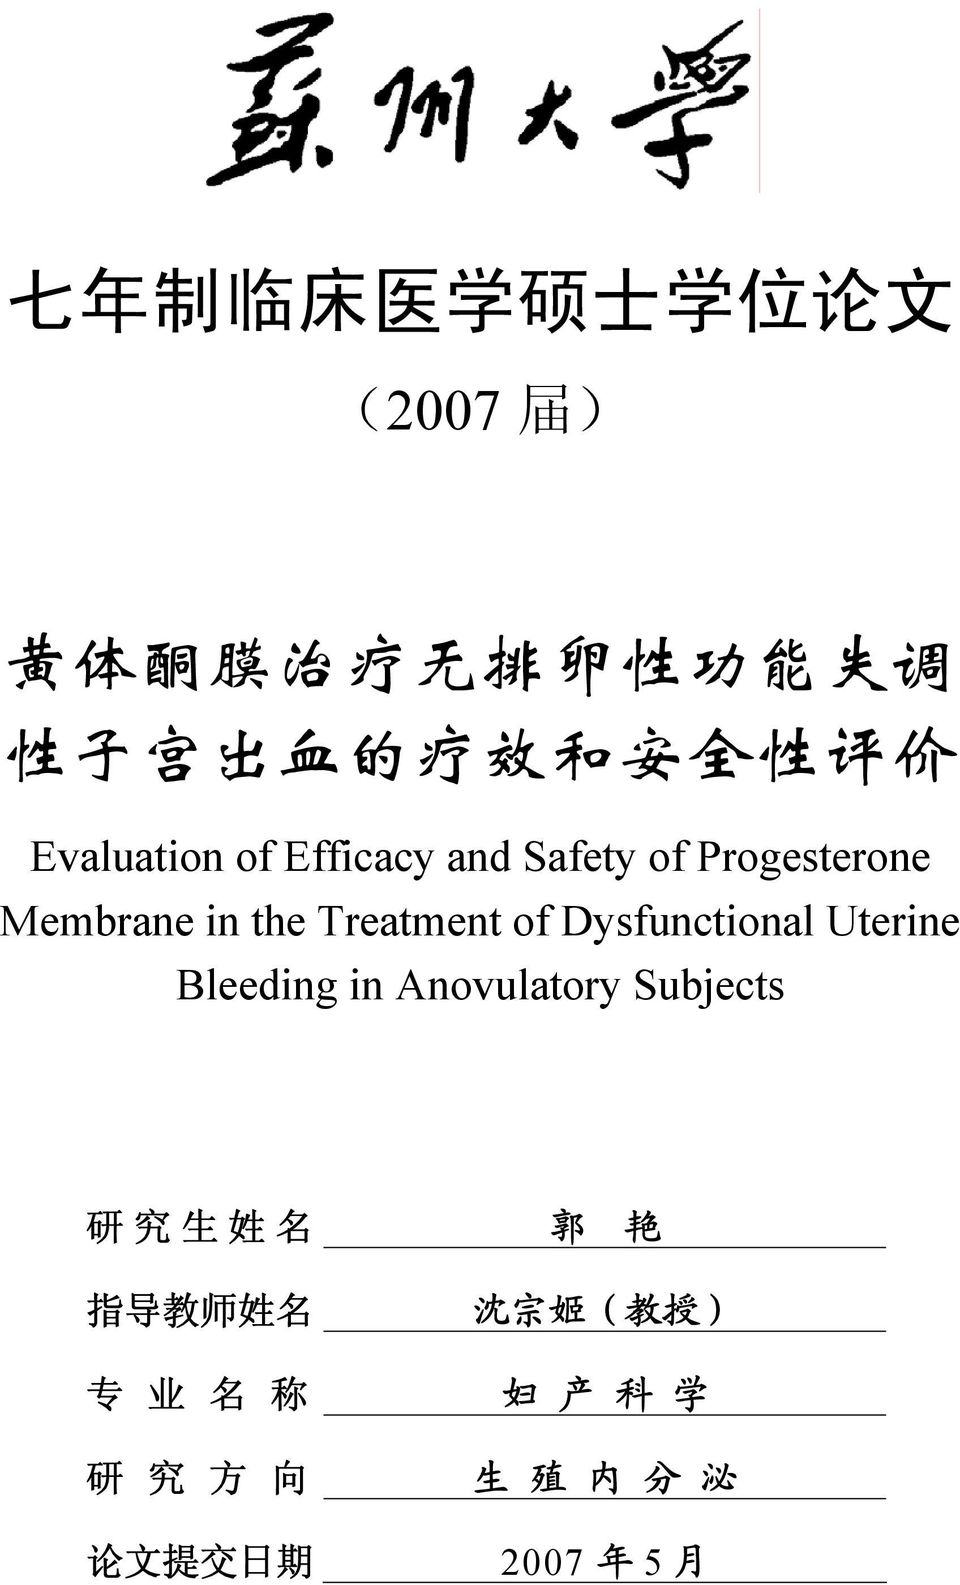 Treatment of Dysfunctional Uterine Bleeding in Anovulatory Subjects 研 究 生 姓 名 郭